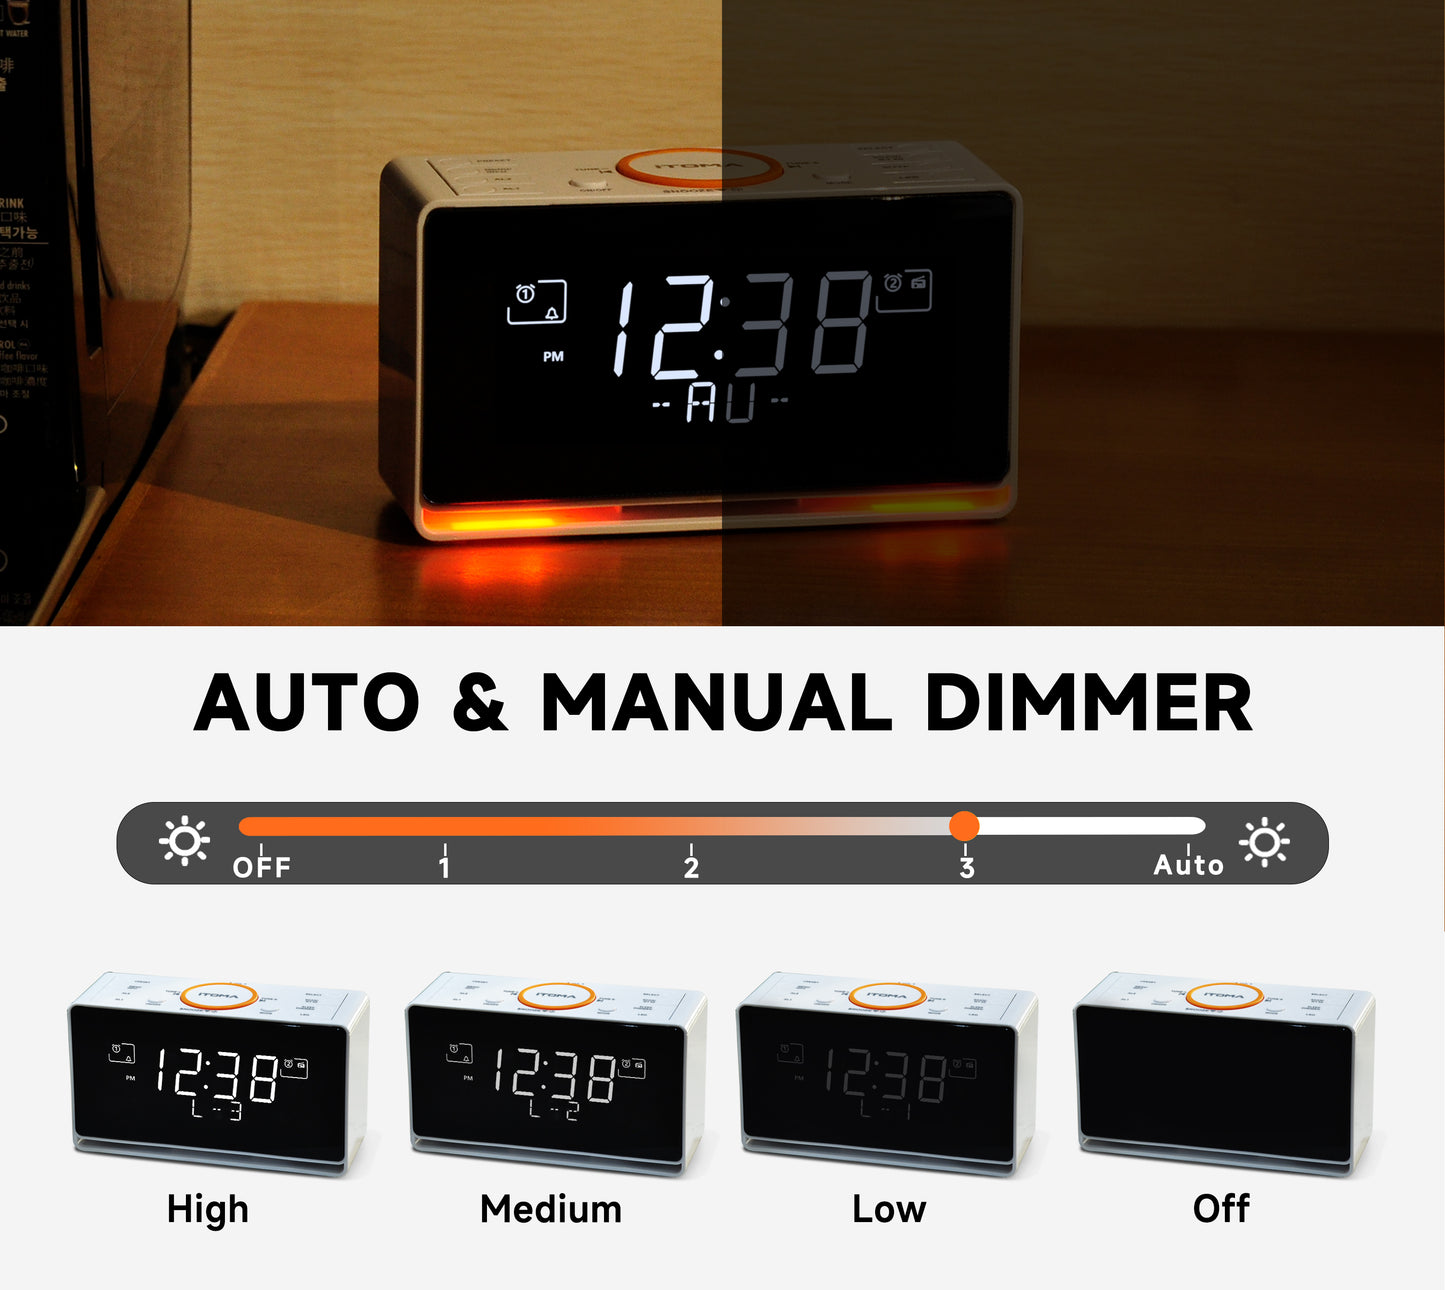 Alarm Clock with DAB & FM Radio iTOMA 728